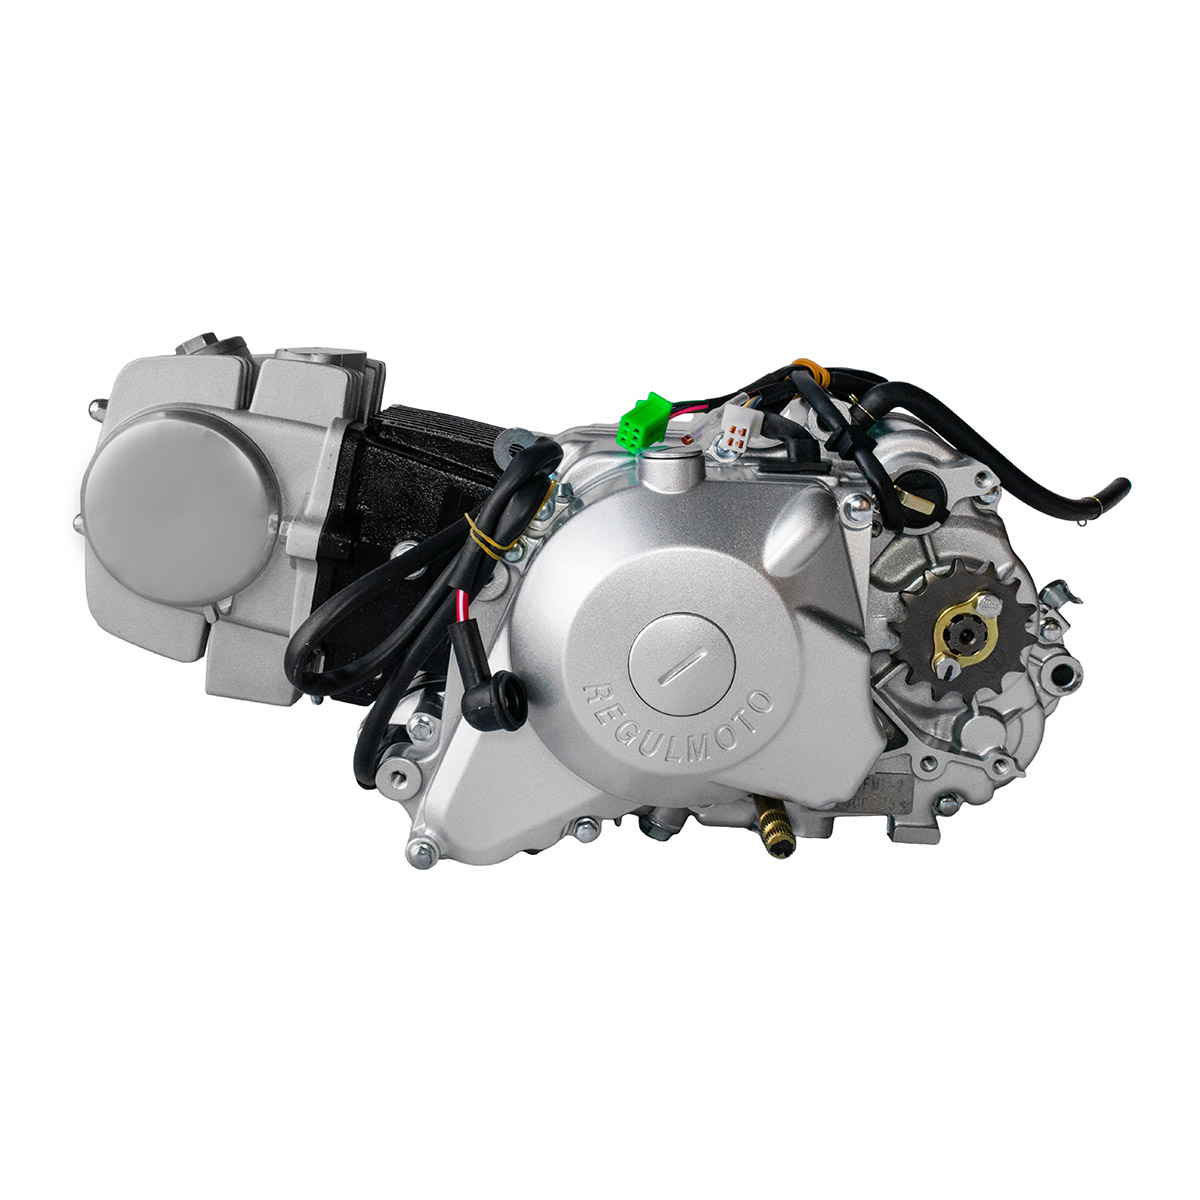 Двигатель BS125 (ZS154FMI-2) электростартер